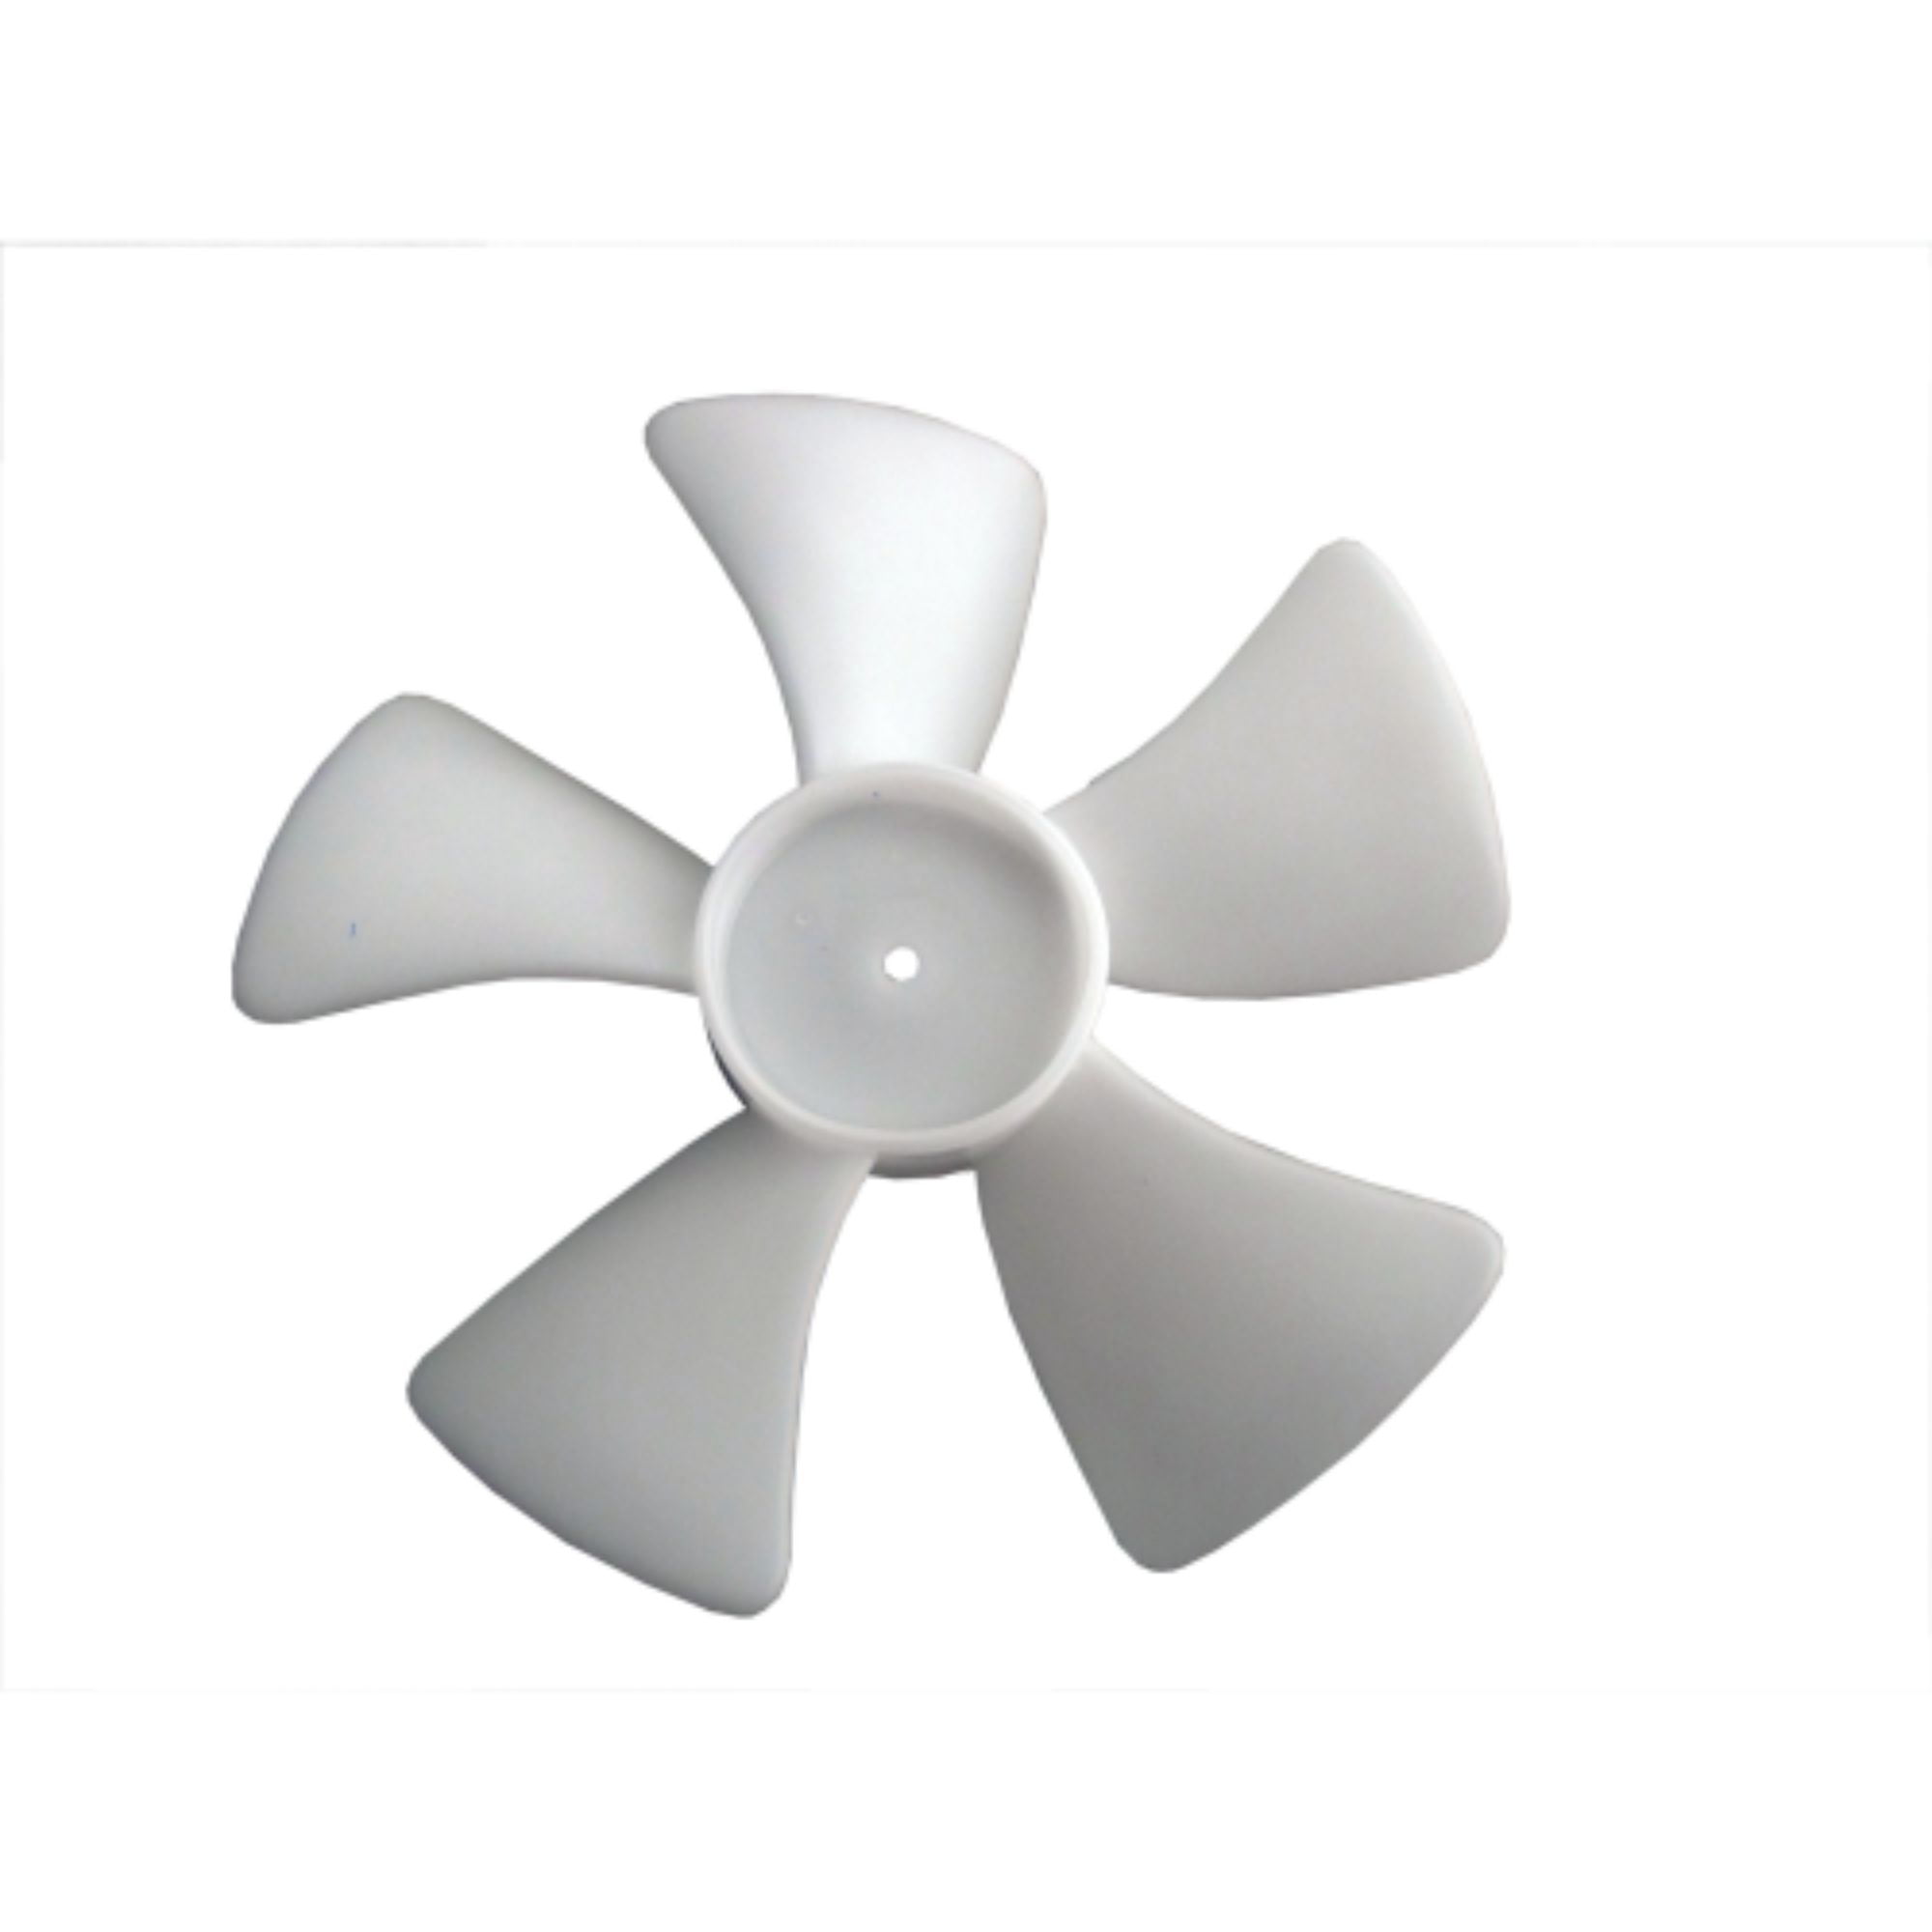 6-1/2" Plastic Fan Blade fits Supco, replaces 650C1875C1 - Walmart.com